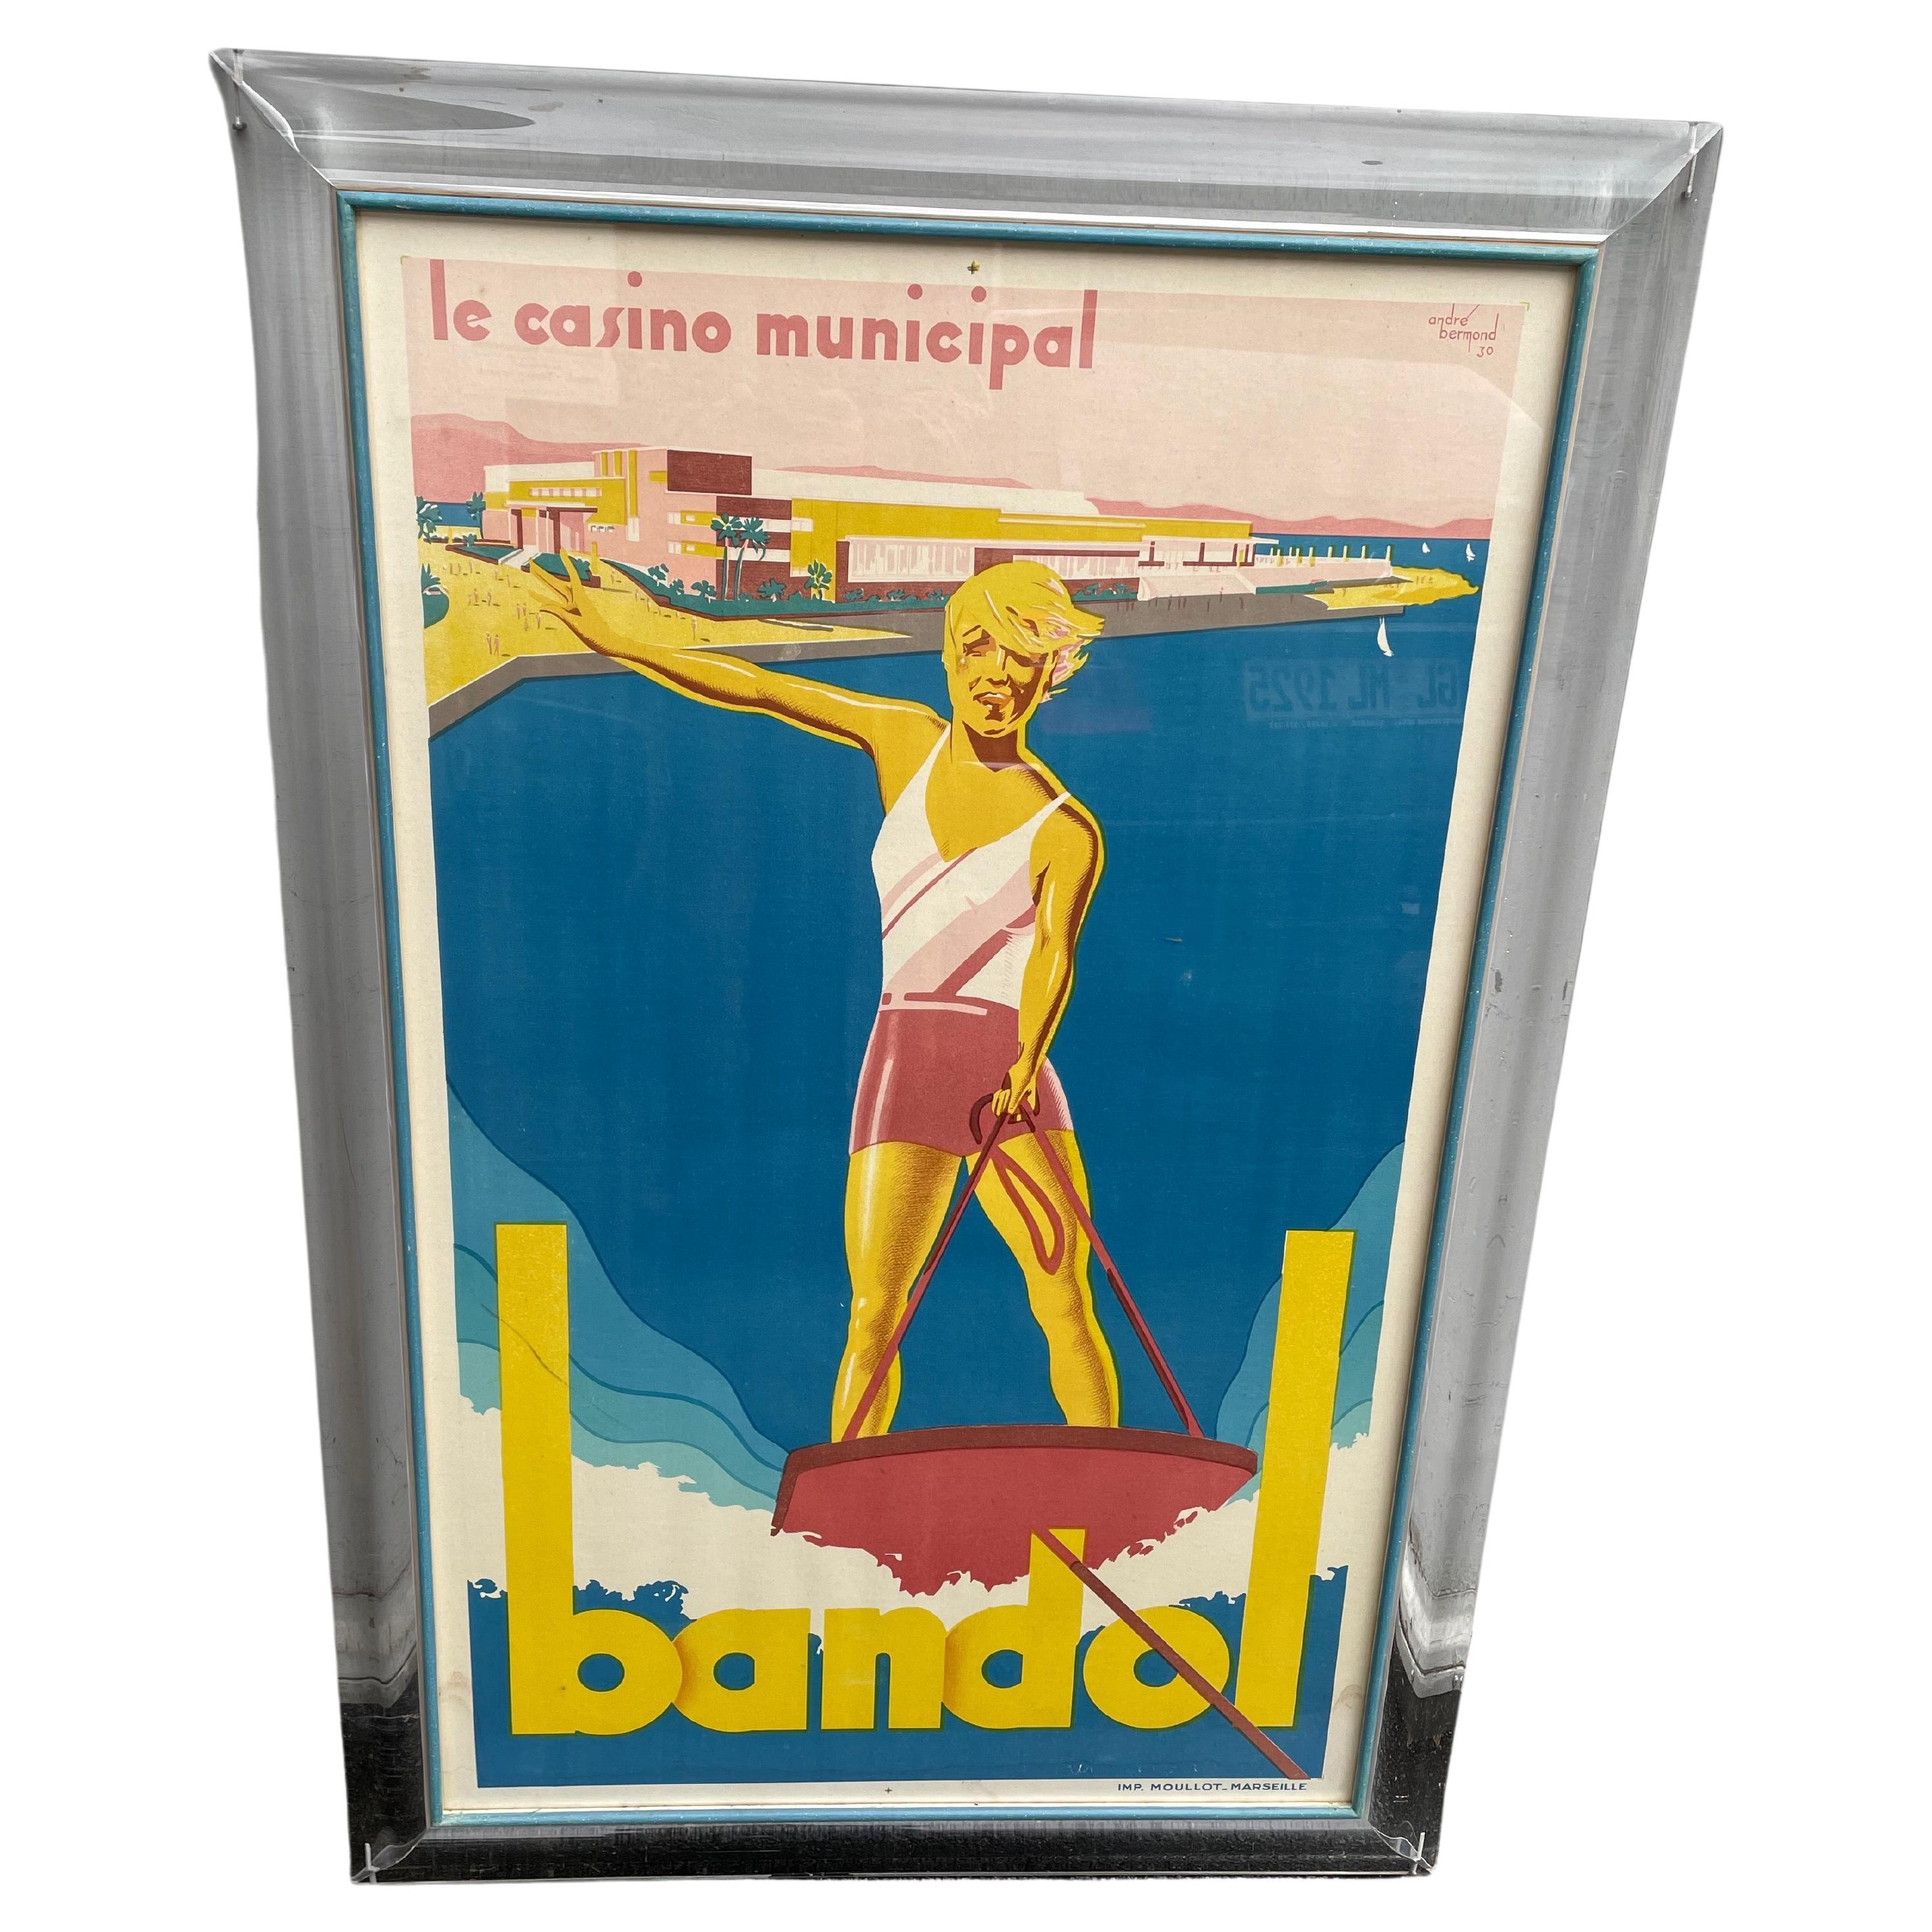 Travel Poster "Bandol Le Casino Municipal" A.Bermond. France 1930. Framed.